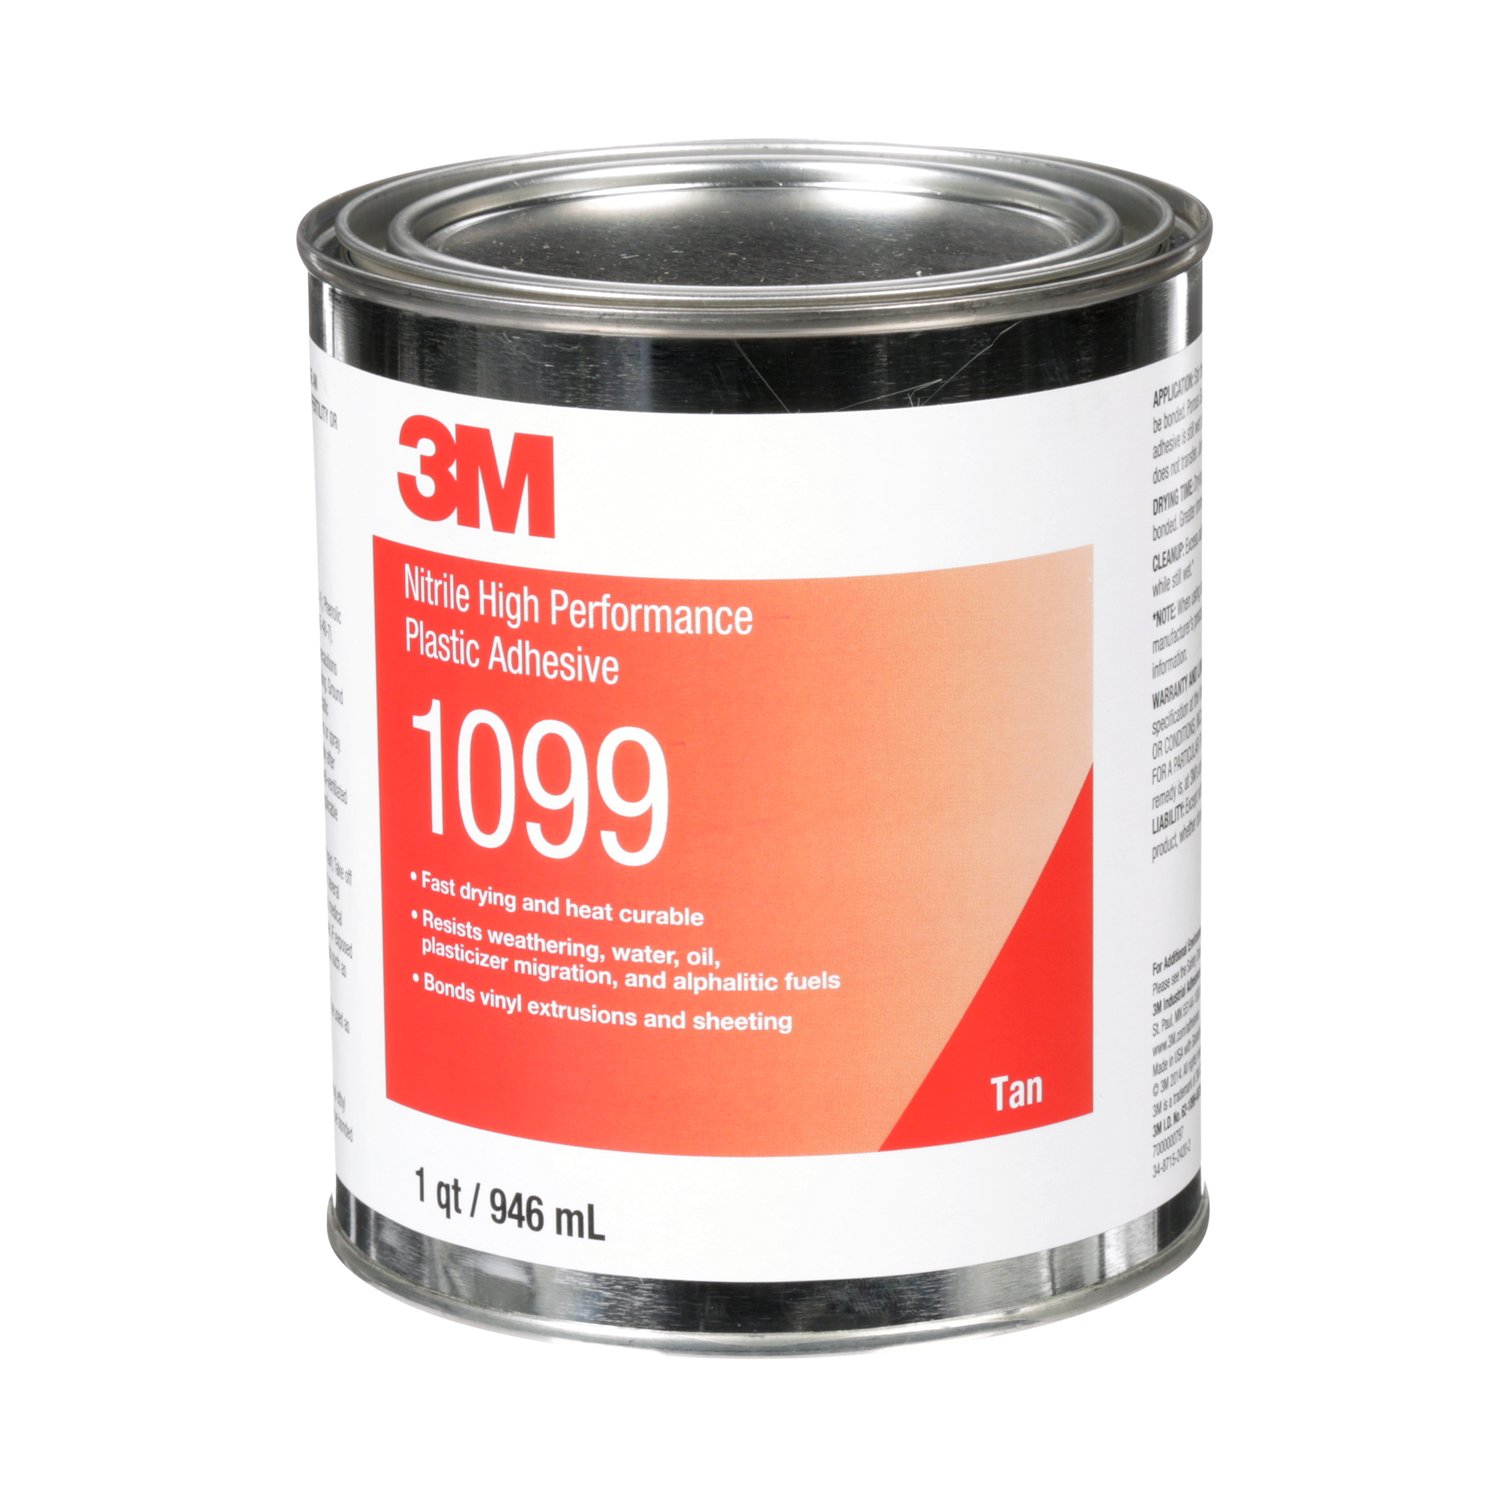 7000000797 - 3M Nitrile High Performance Plastic Adhesive 1099, Tan, 1 Quart, 12
Can/Case